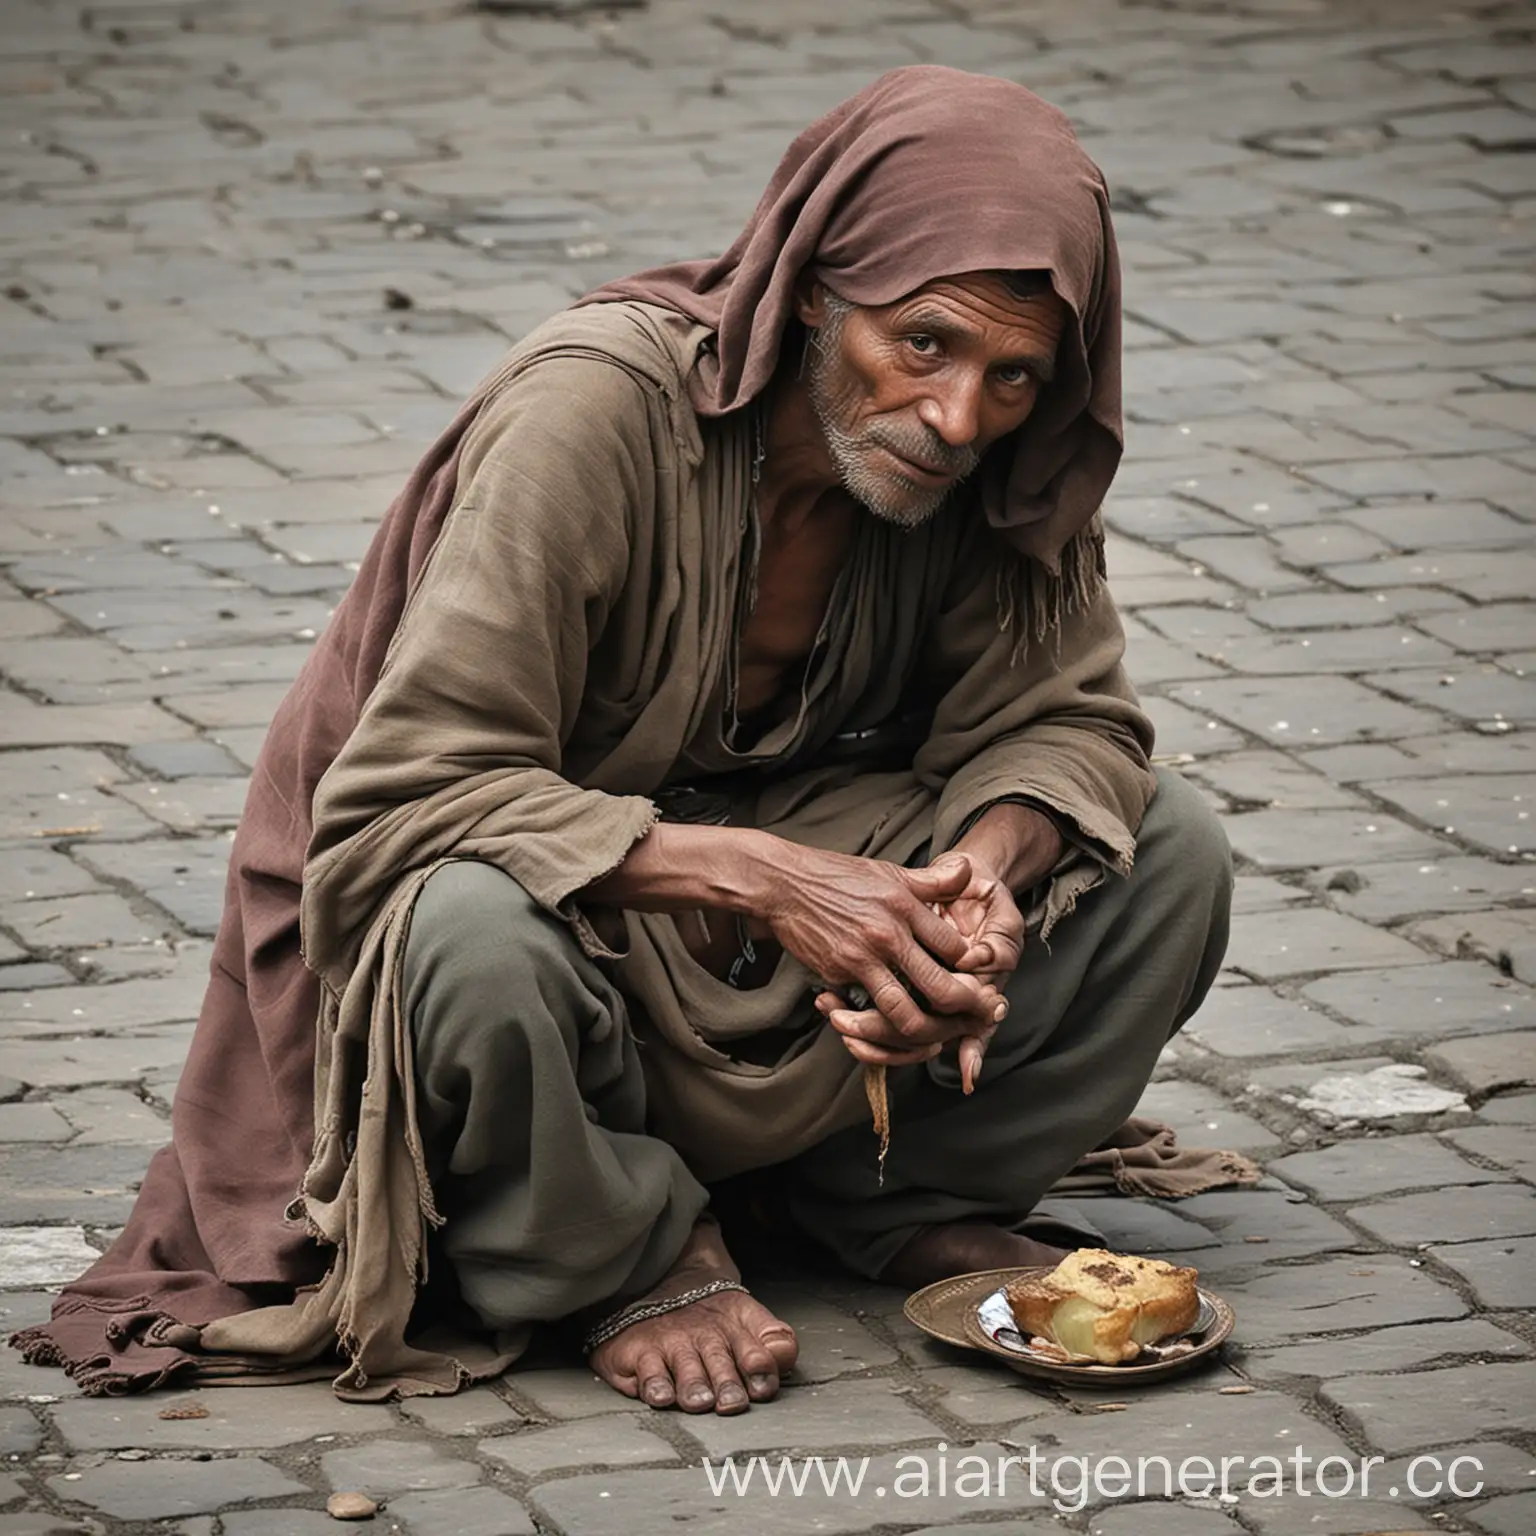 Urban-Beggar-Asking-for-Alms-in-City-Street